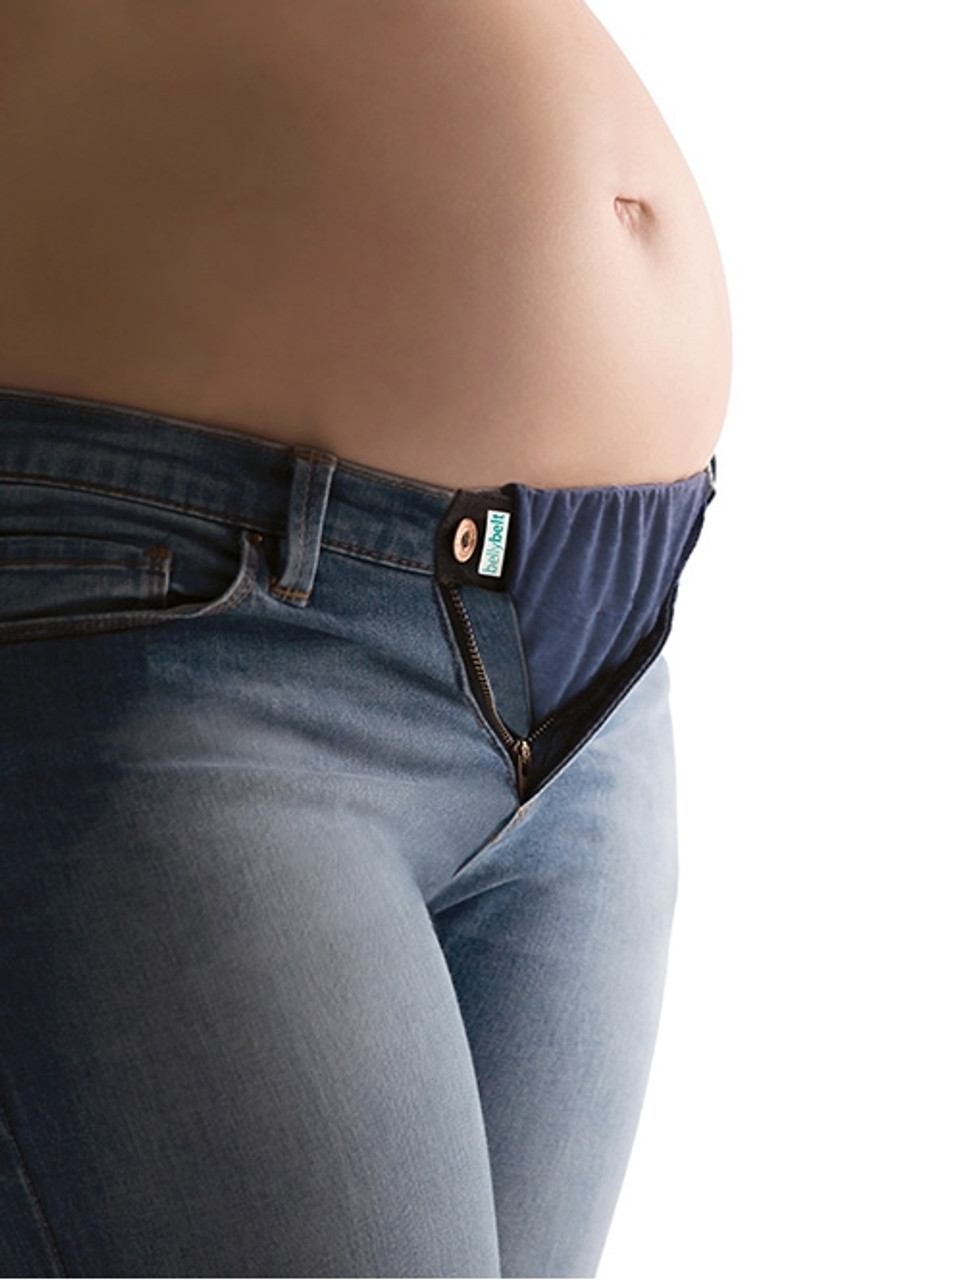 Belly Belt - Extend your Wardrobe into Maternity Wear